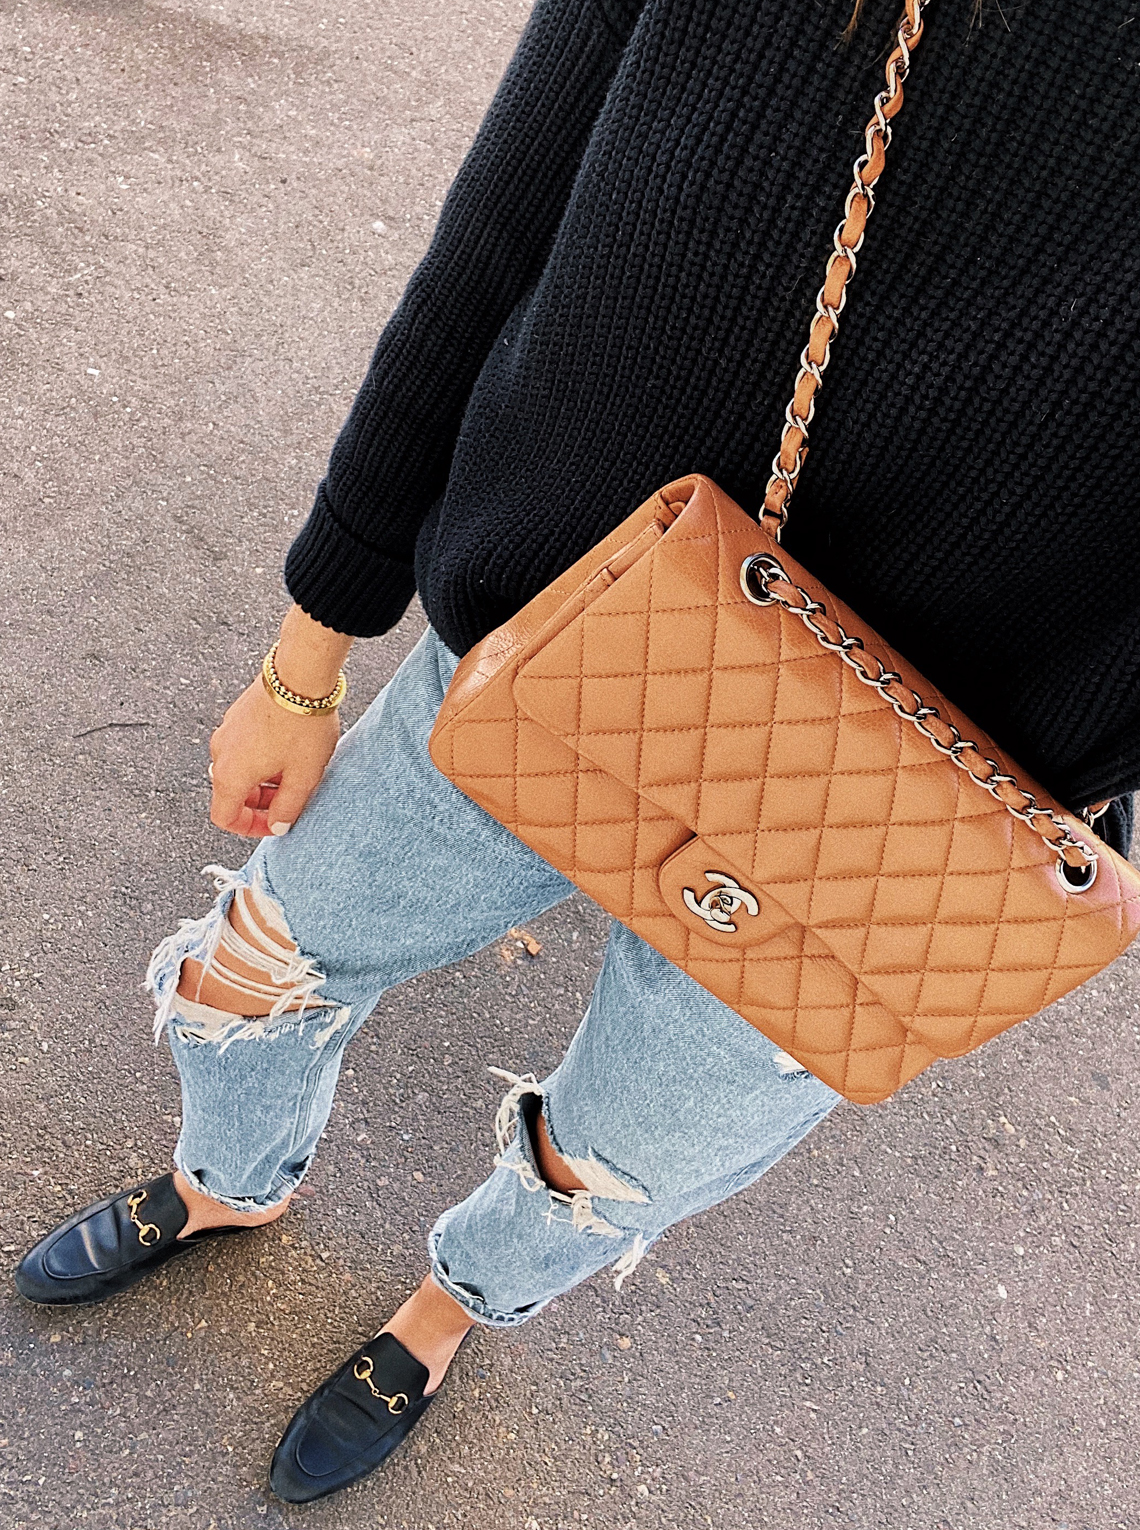 New Chanel Handbag - Fashion Jackson